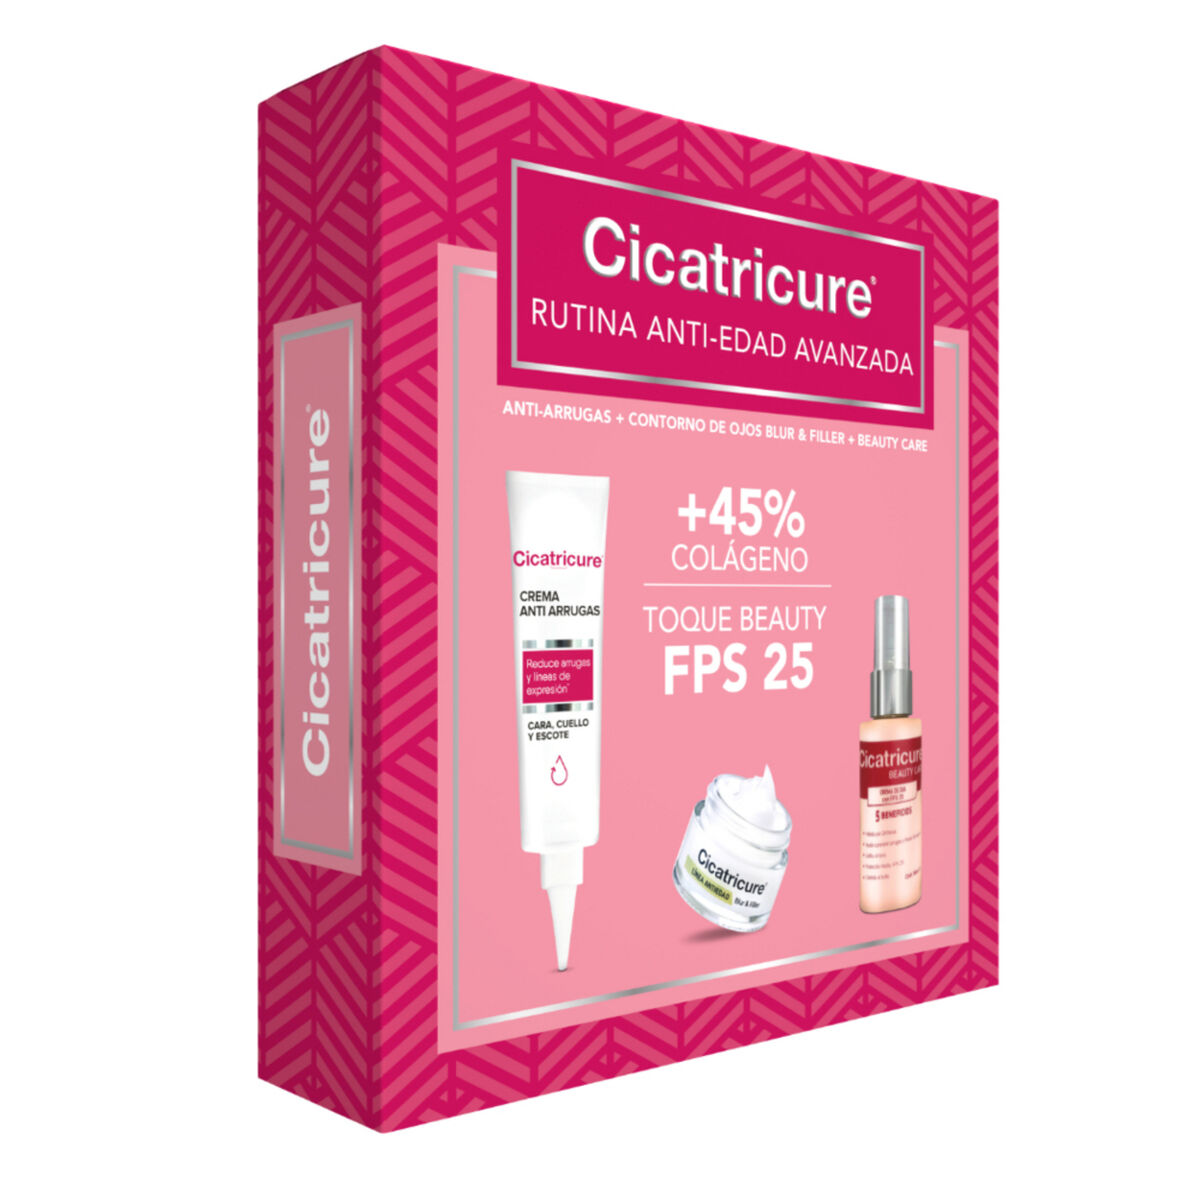 Tripack Cicatricure Antiedad: Crema 30G + B&F + Beauty Care